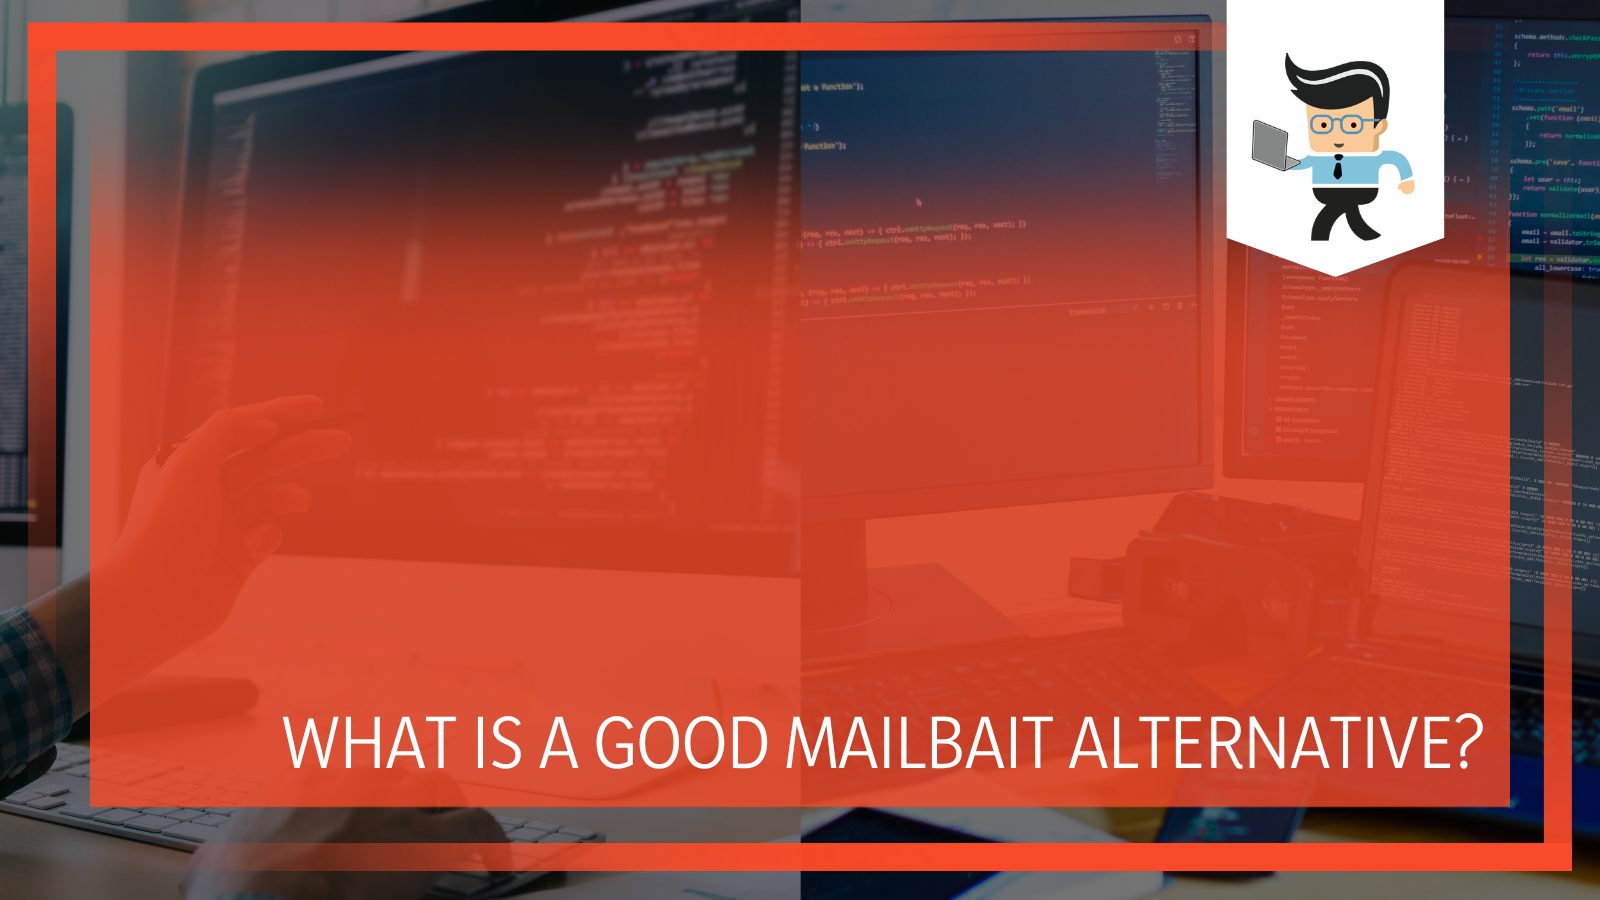 Mailbait similar programs